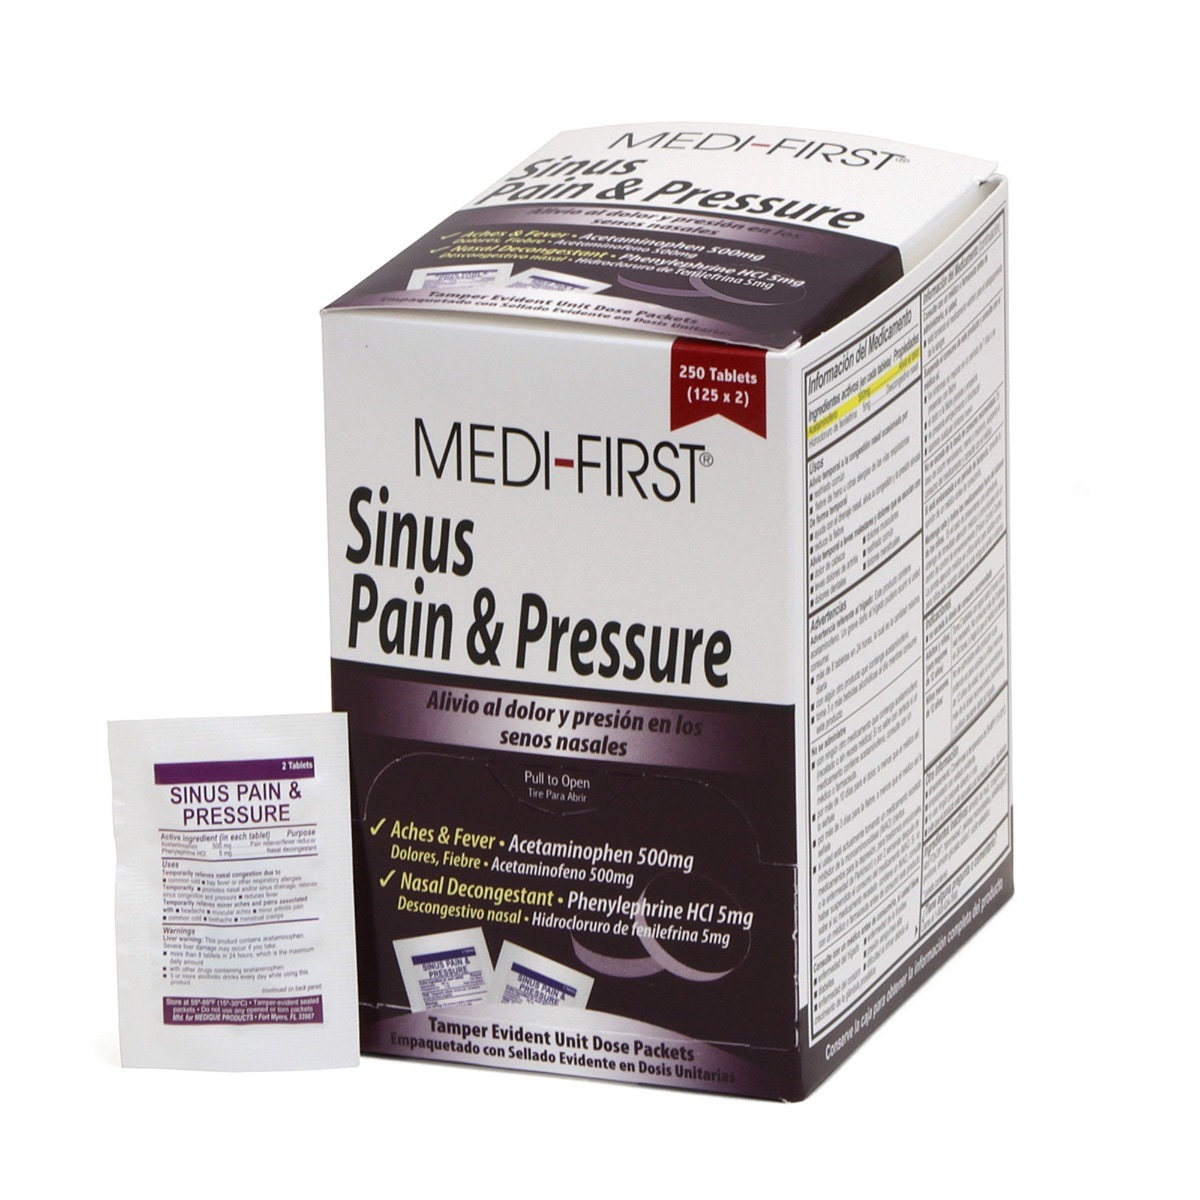 Medi-First Sinus Pain & Pressure